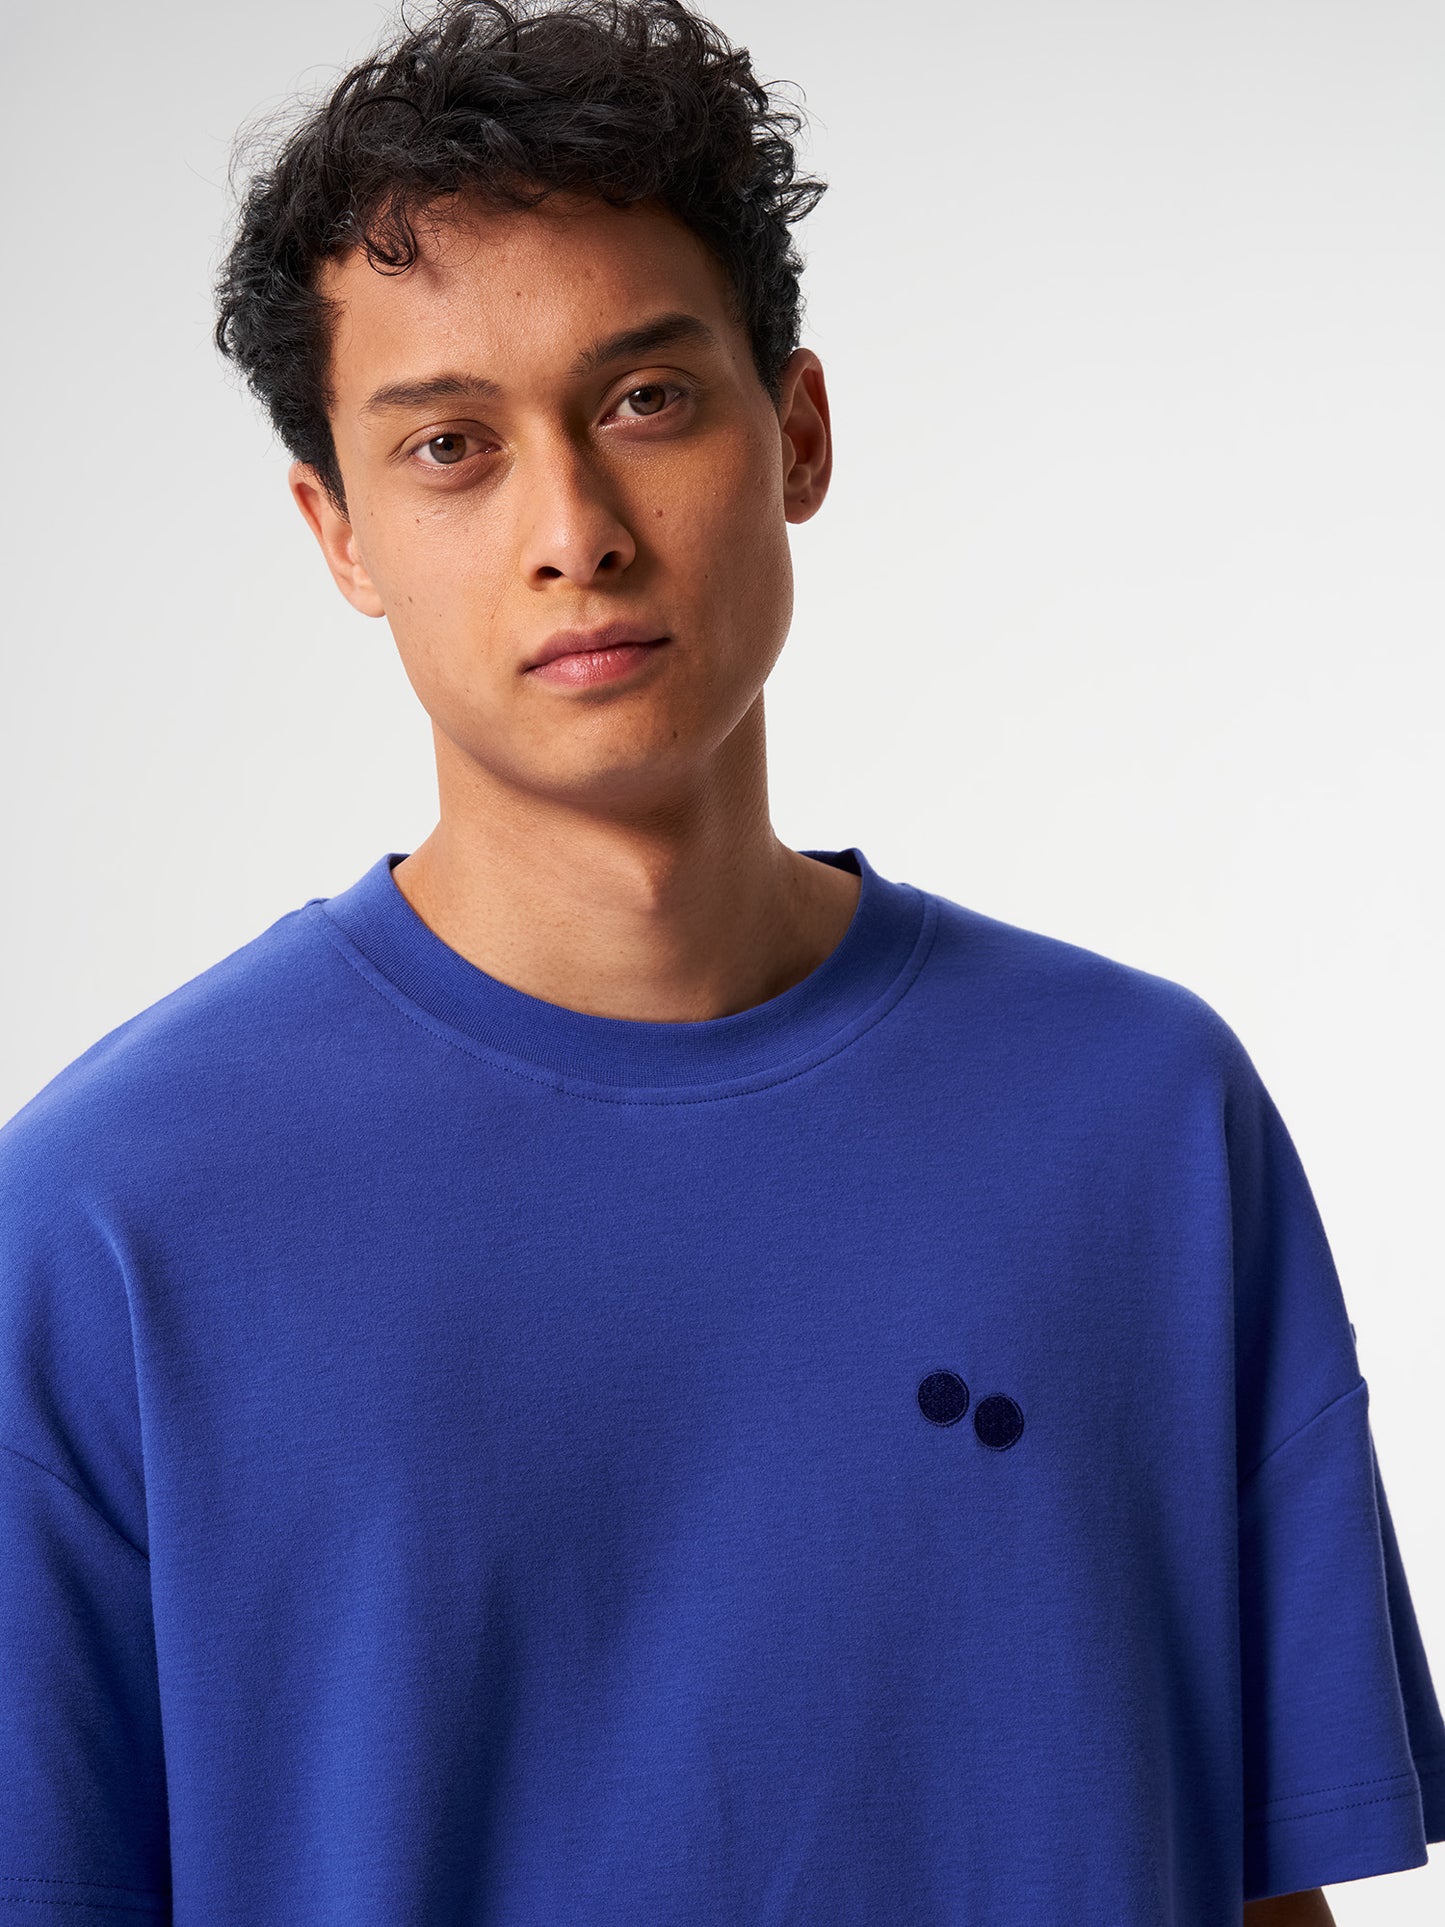 pinqponq-Tshirt-Unisex-Poppy-Blue-model-closeup-front